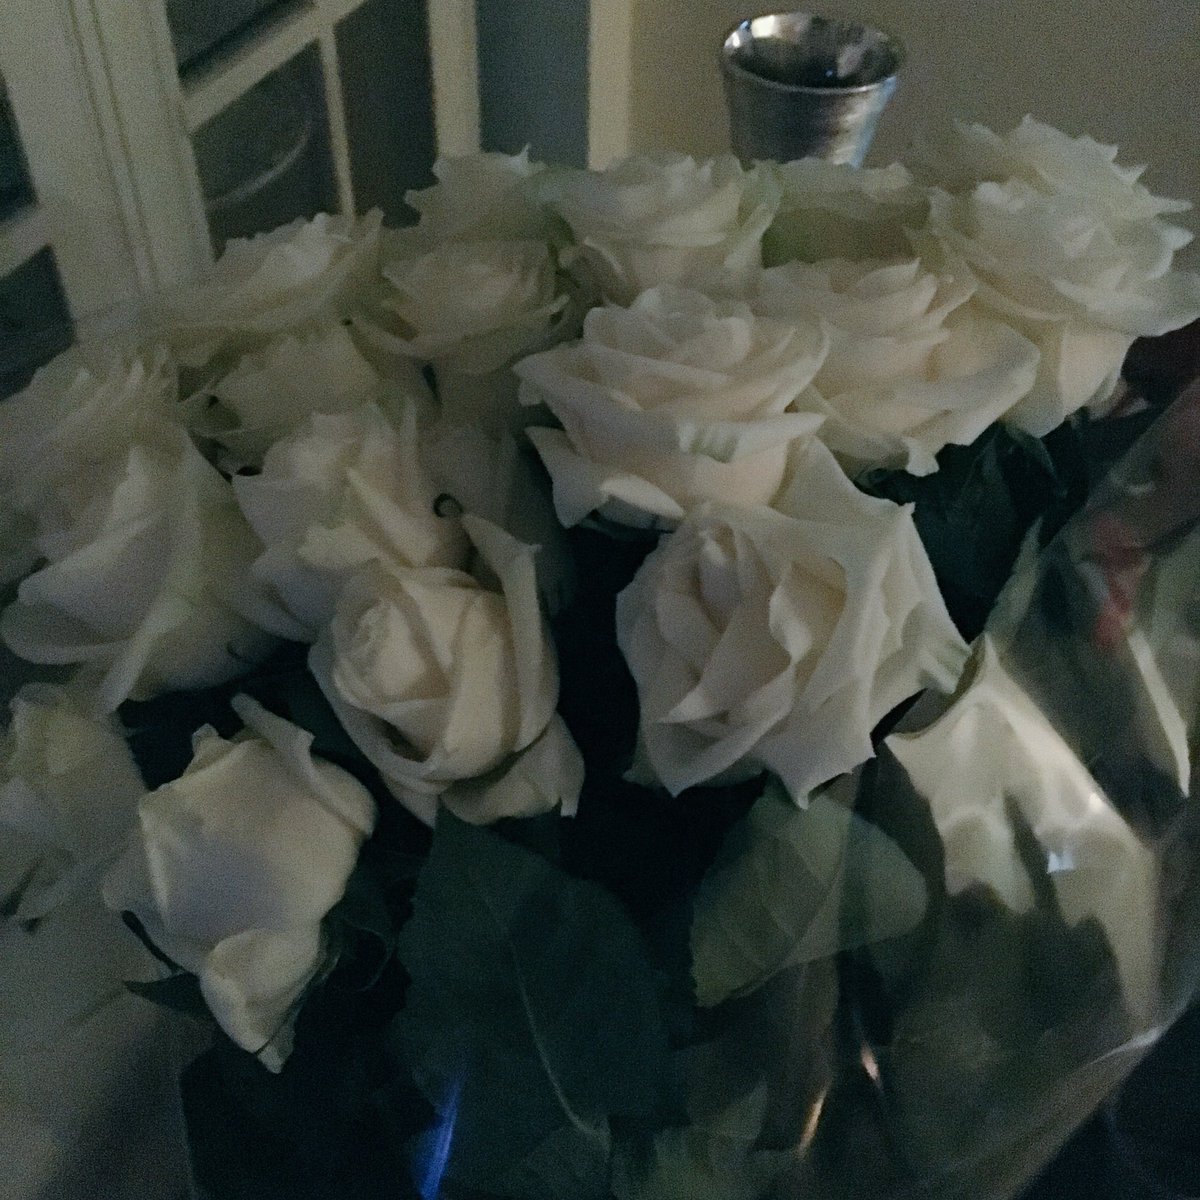 Белый букет роз